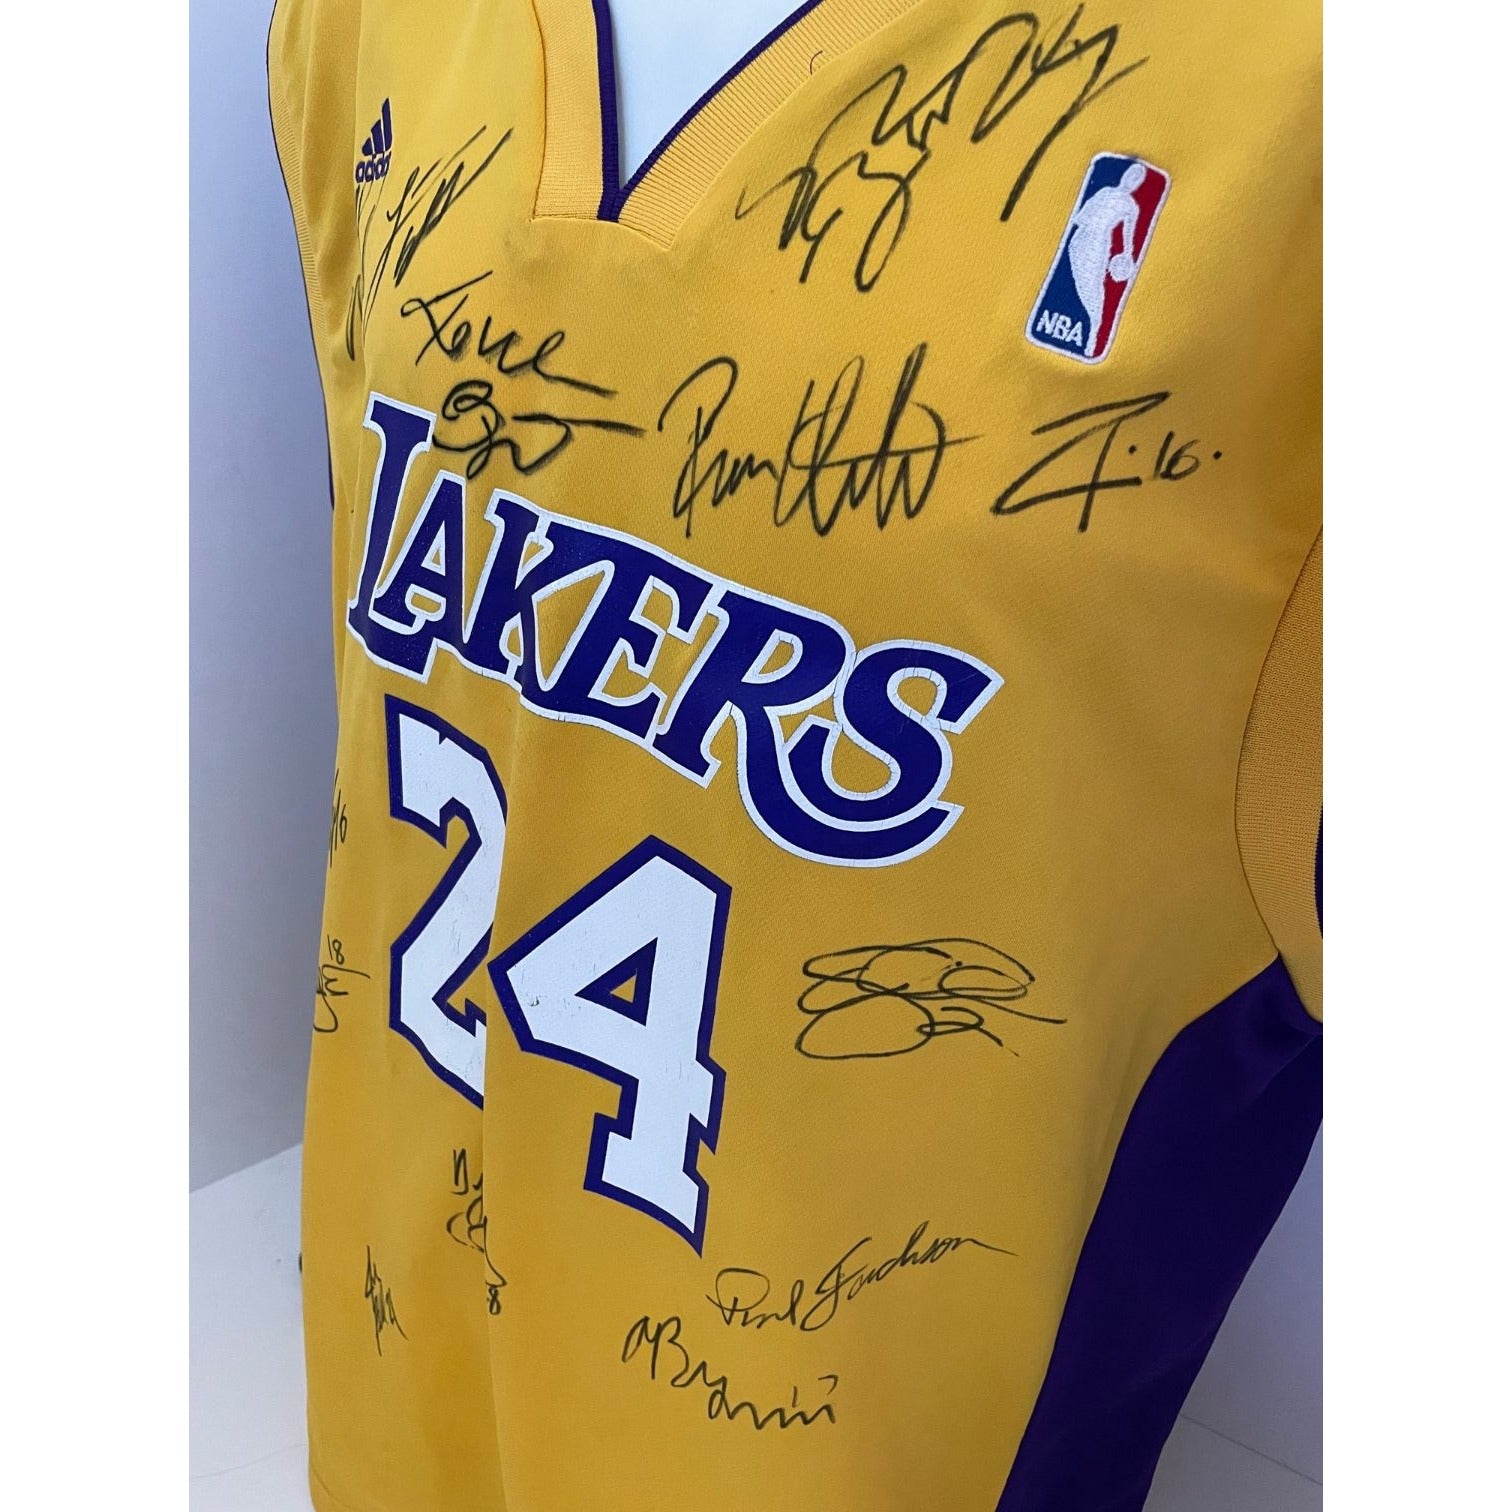 Lakers Kobe Jersey -  Canada